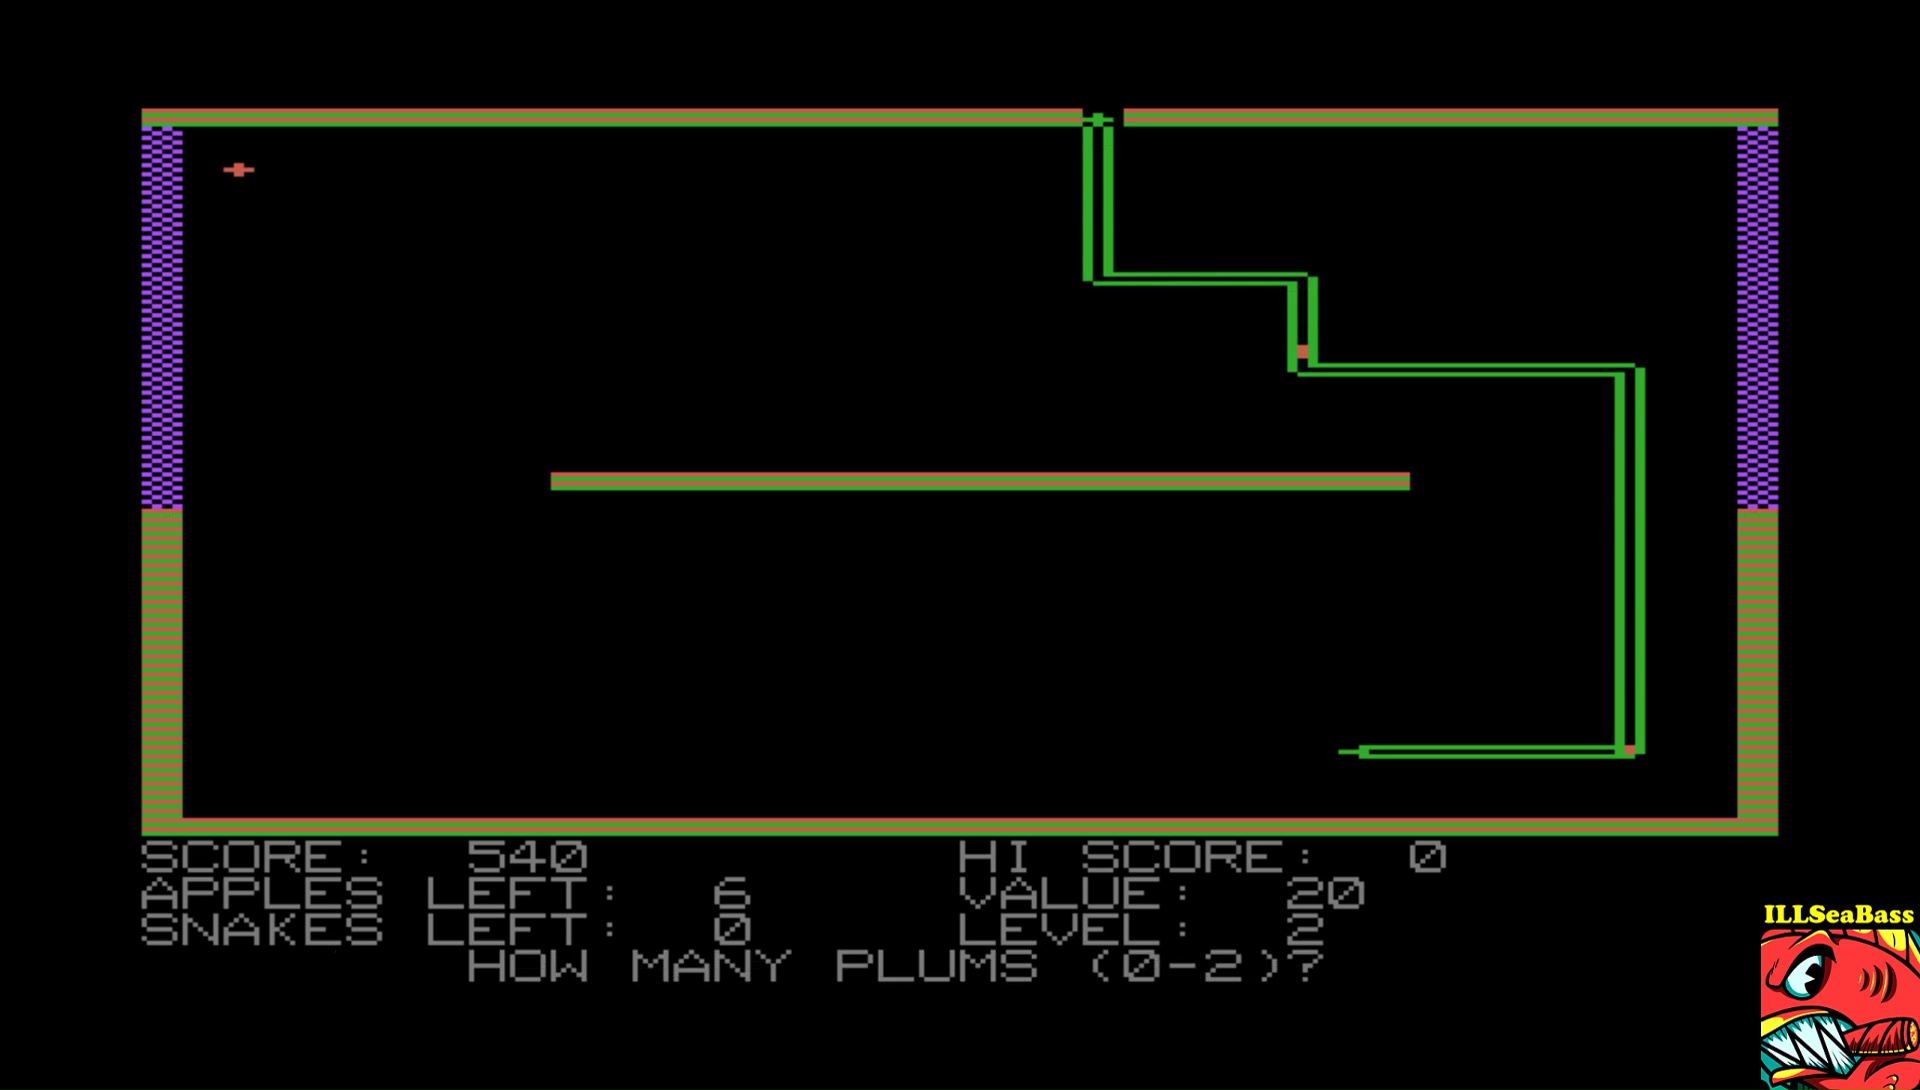 ILLSeaBass: Snake Byte [Plums: 0] (Atari 400/800/XL/XE Emulated) 540 points on 2017-08-26 12:02:22